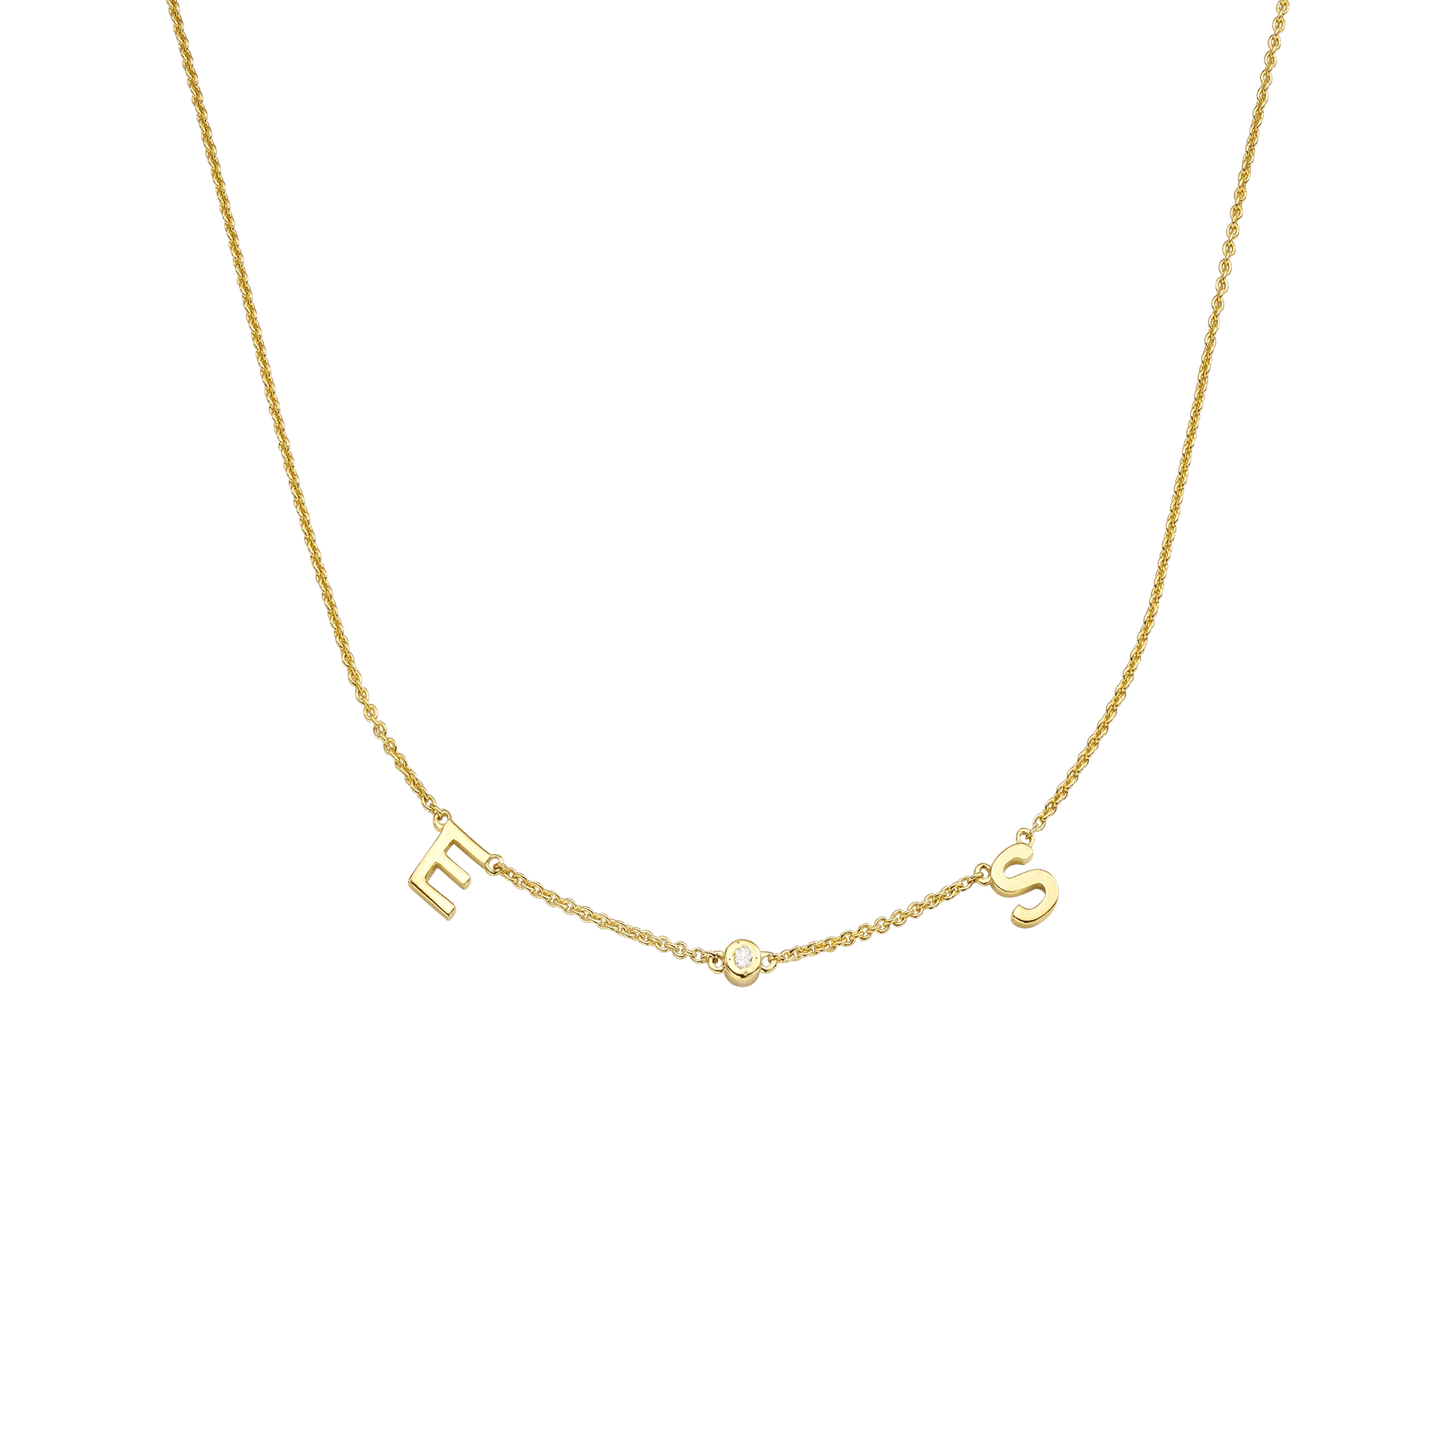 Collier Initial & Diamant(s) - Or Jaune Plaqué 18 carats Necklaces magal-dev 1 Initiale + 1 Diamant Adjustable (40cm-43cm) 